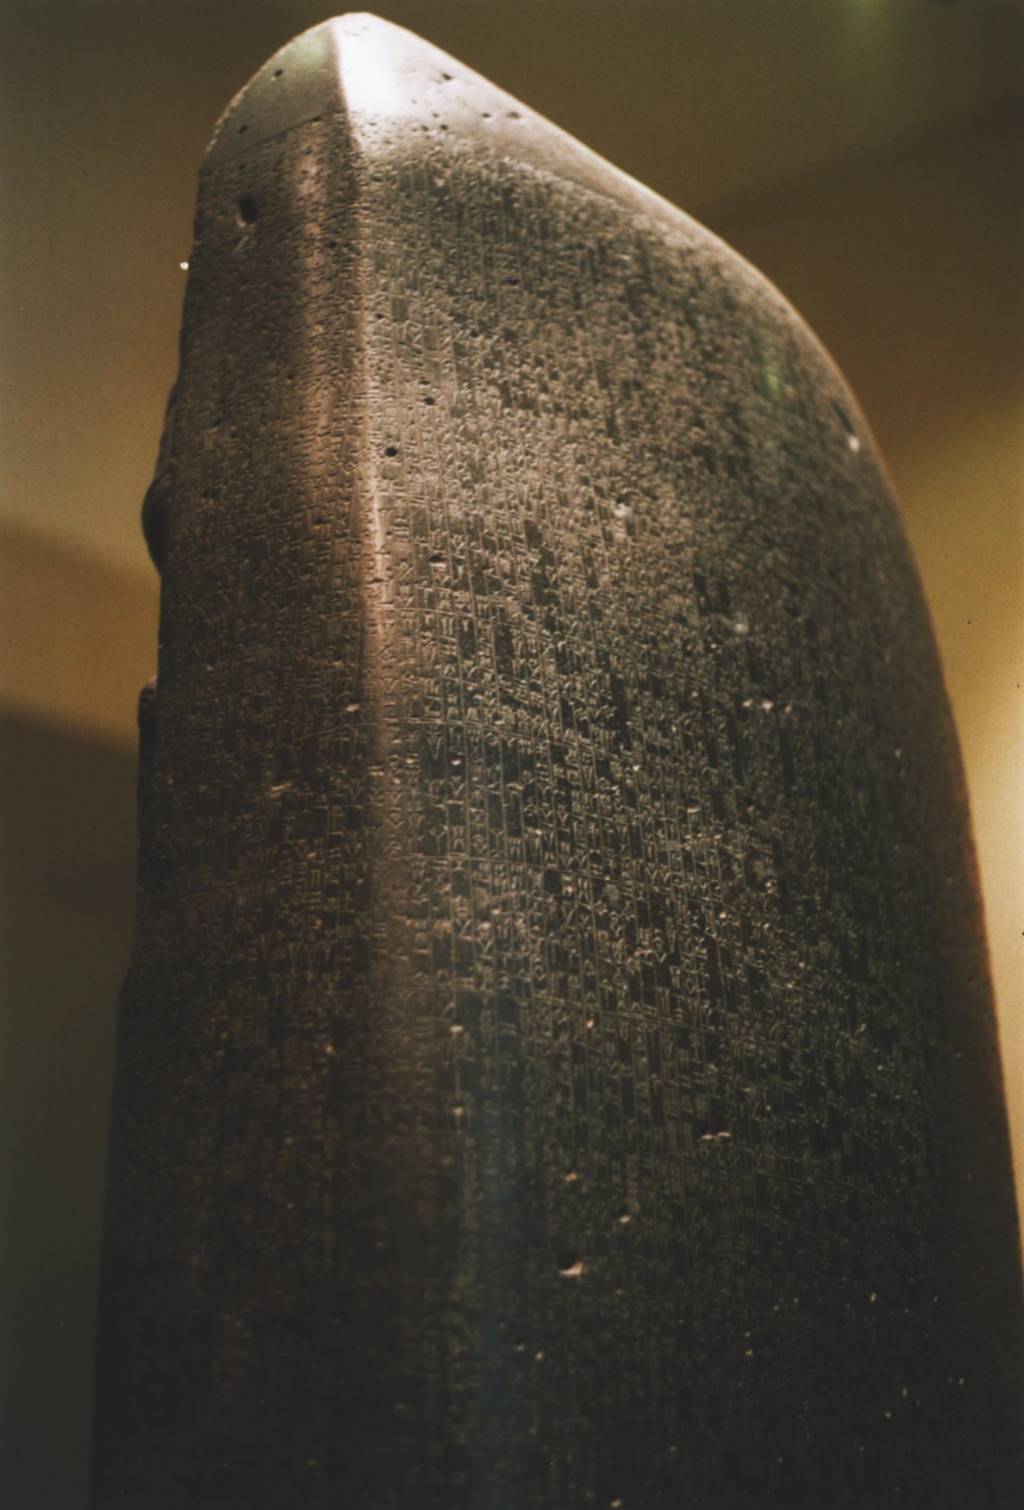 Hammurabi code essay